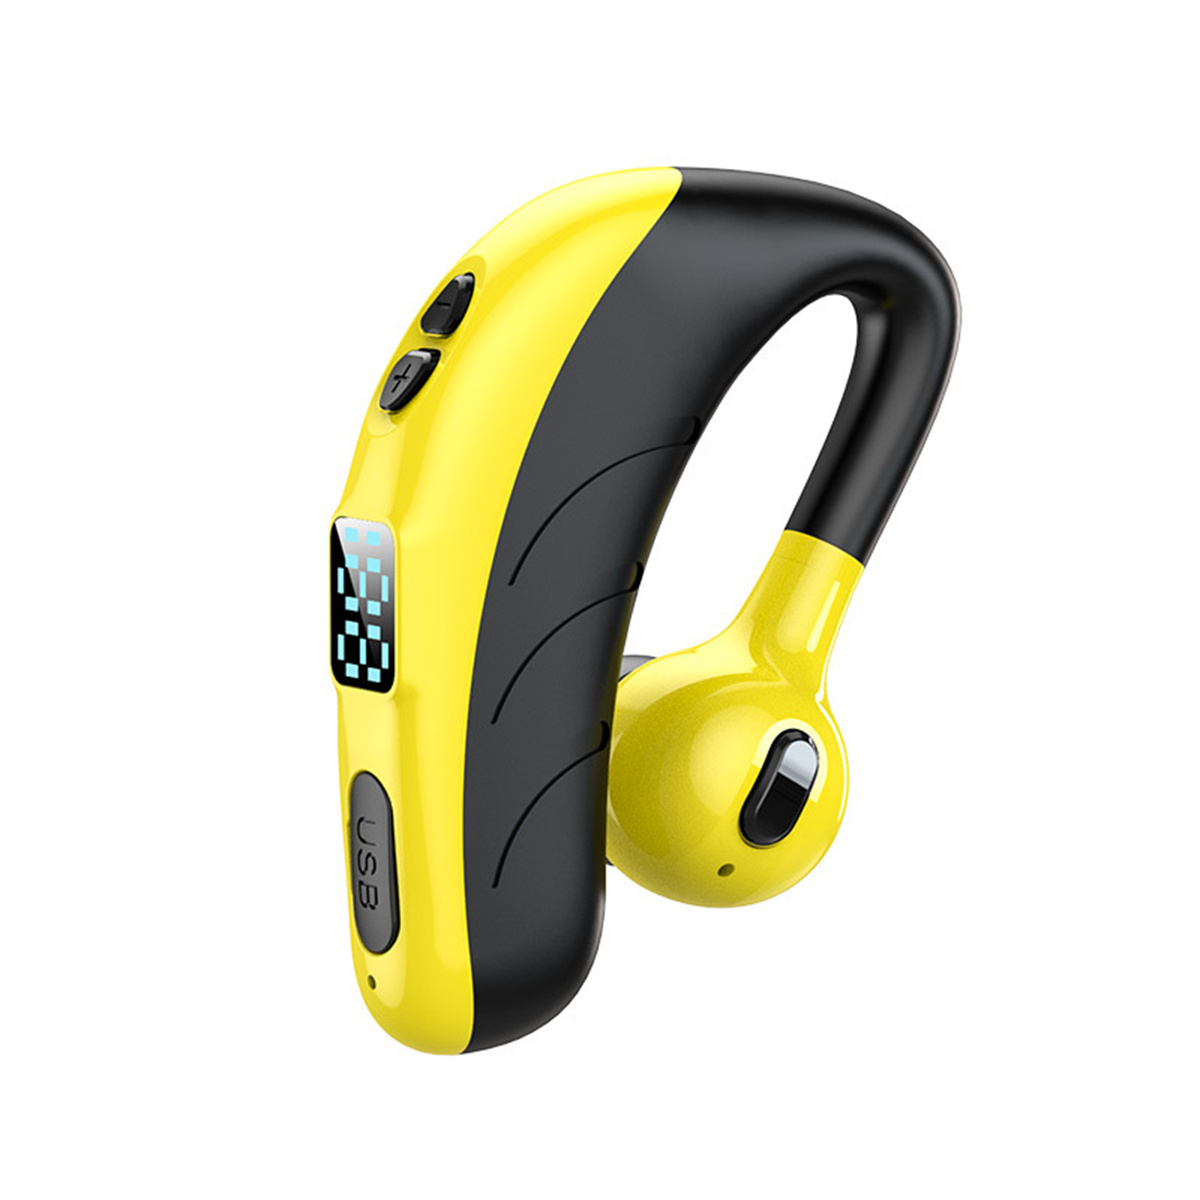 SYNTEK Anzeige earloop Bluetooth On-ear Bluetooth Bluetooth Kopfhörer schwarz digitale Geschäftsmodell, Schwarz Kopfhörer